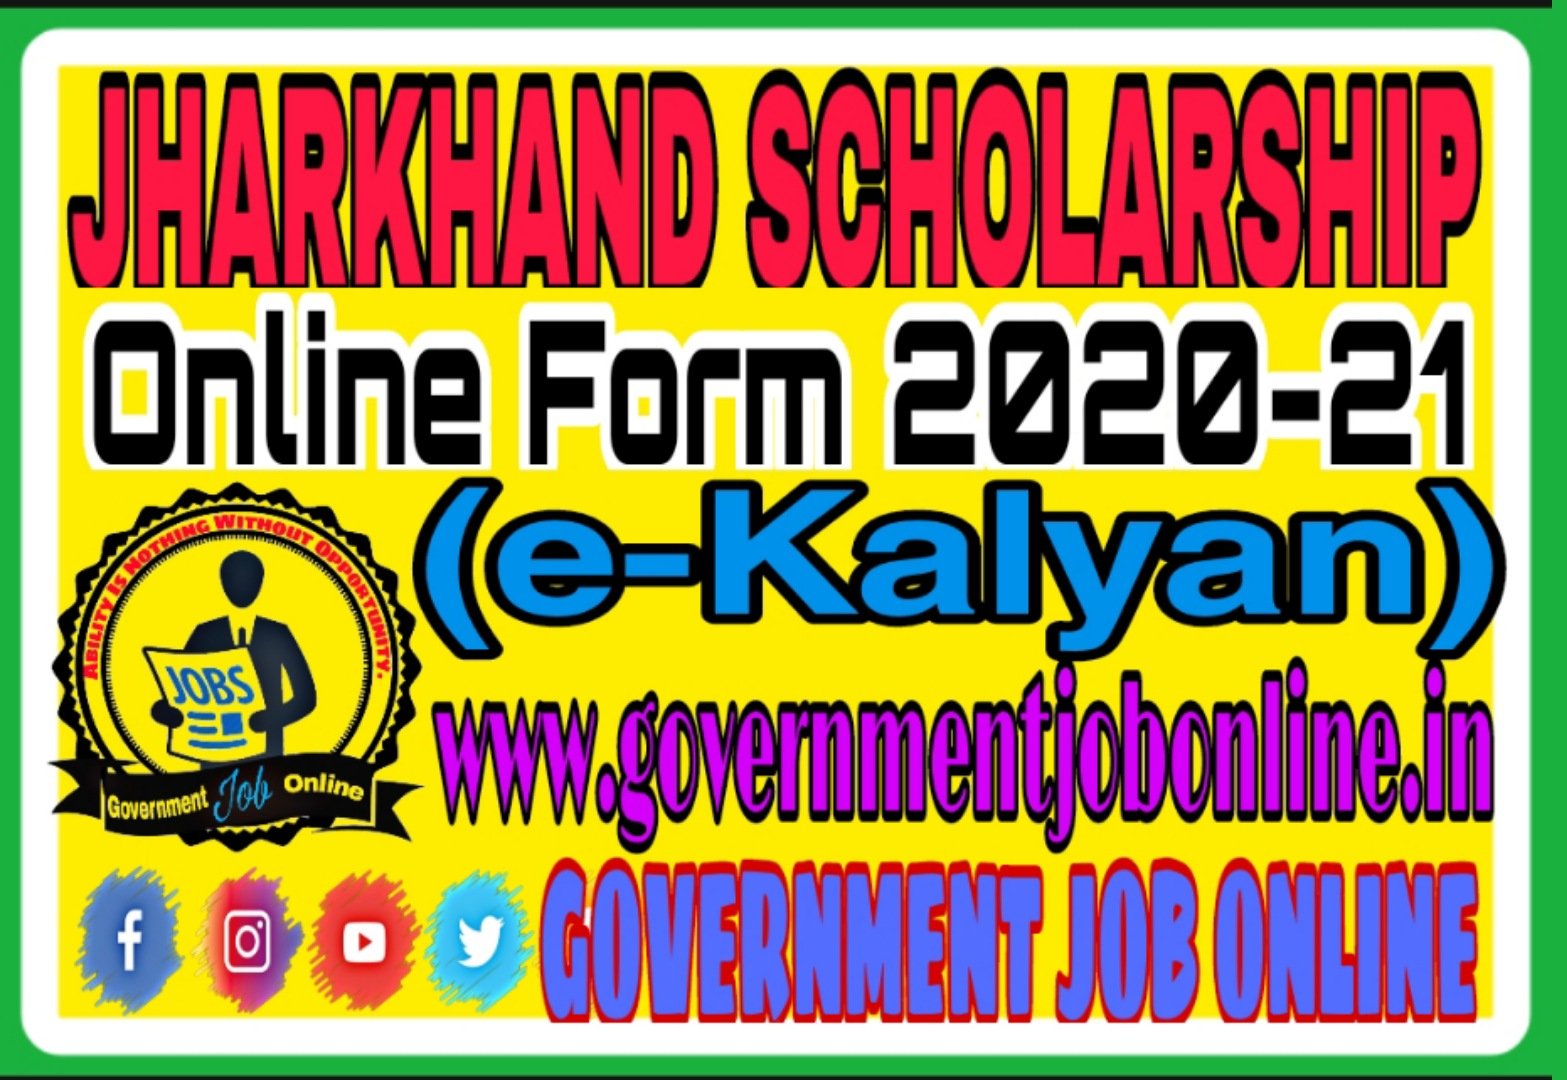 Jharkhand Scholarship Online Form 2021-22, Jharkhand Scholarship Online Form 2021-22